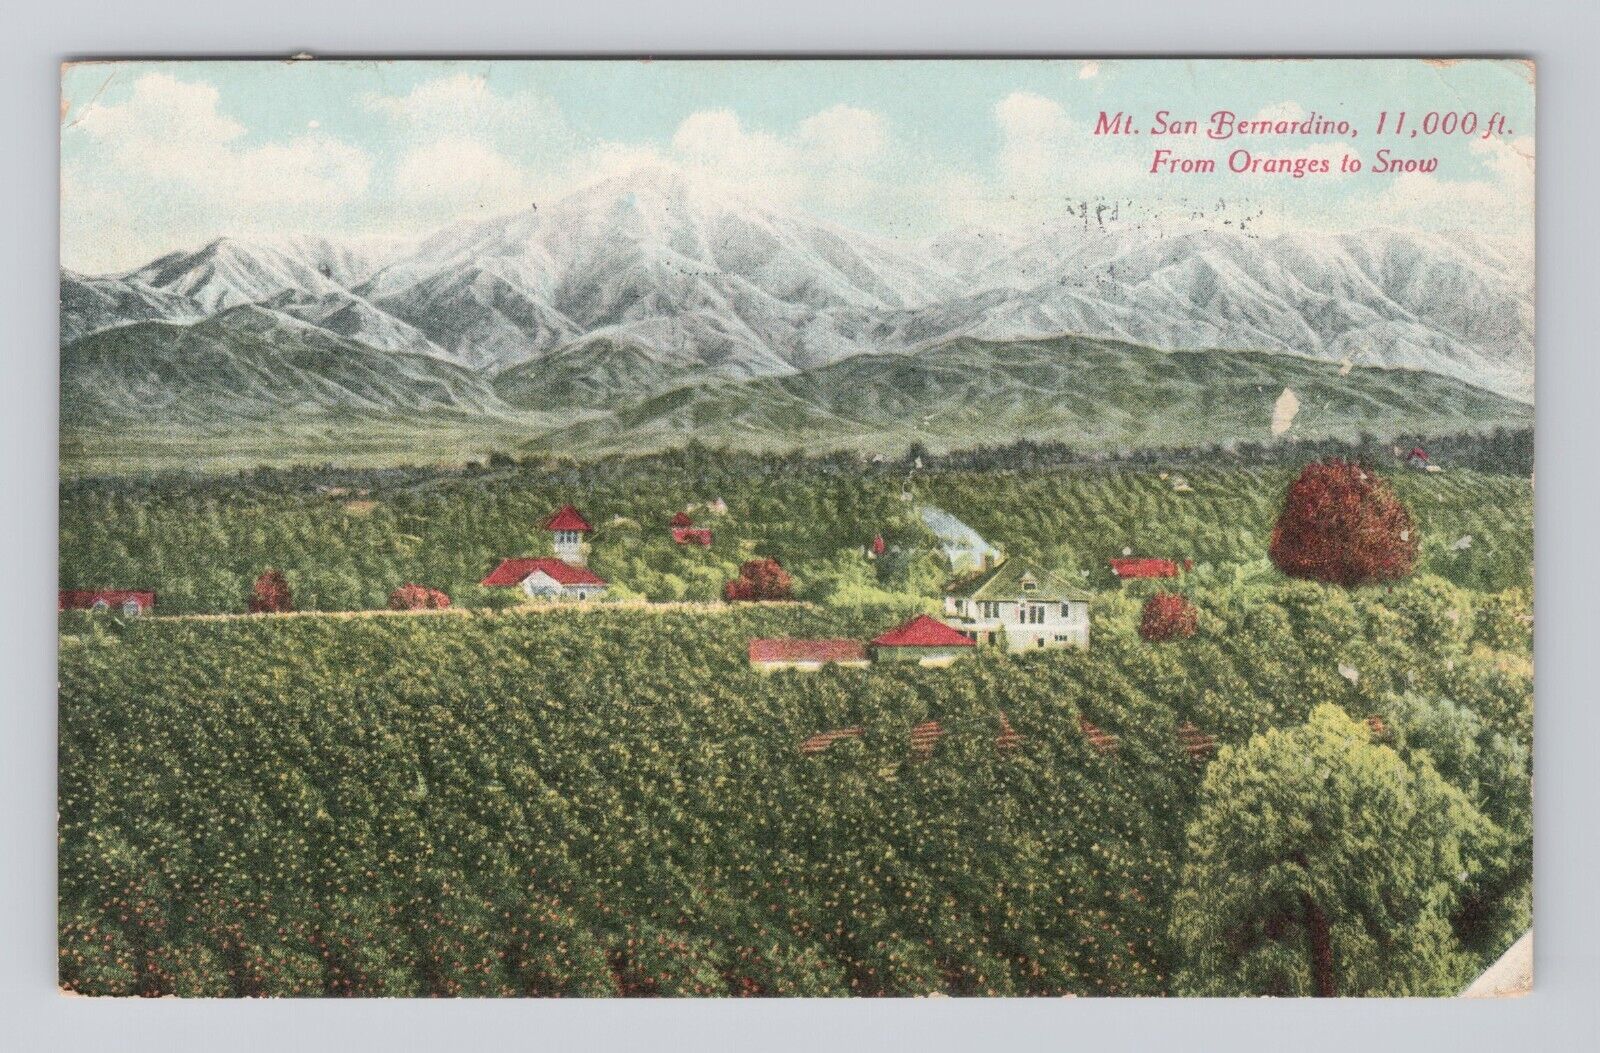 Postcard Mt San Bernardino California 11,000 ft From Oranges to Snow posted